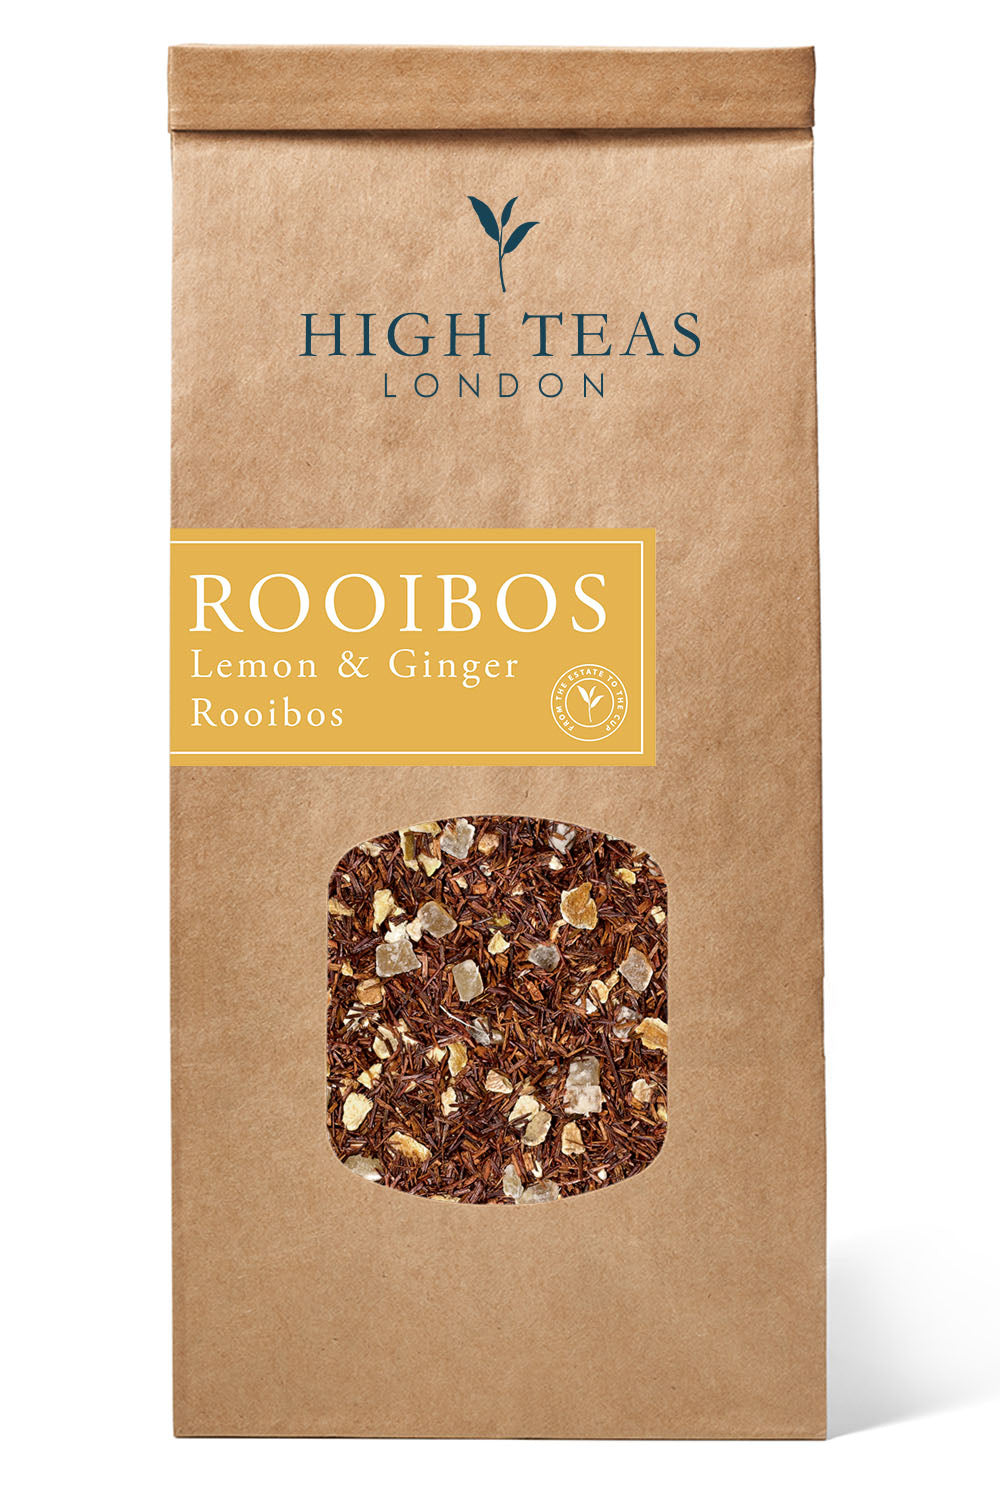 Lemon & Ginger Rooibos-250g-Loose Leaf Tea-High Teas